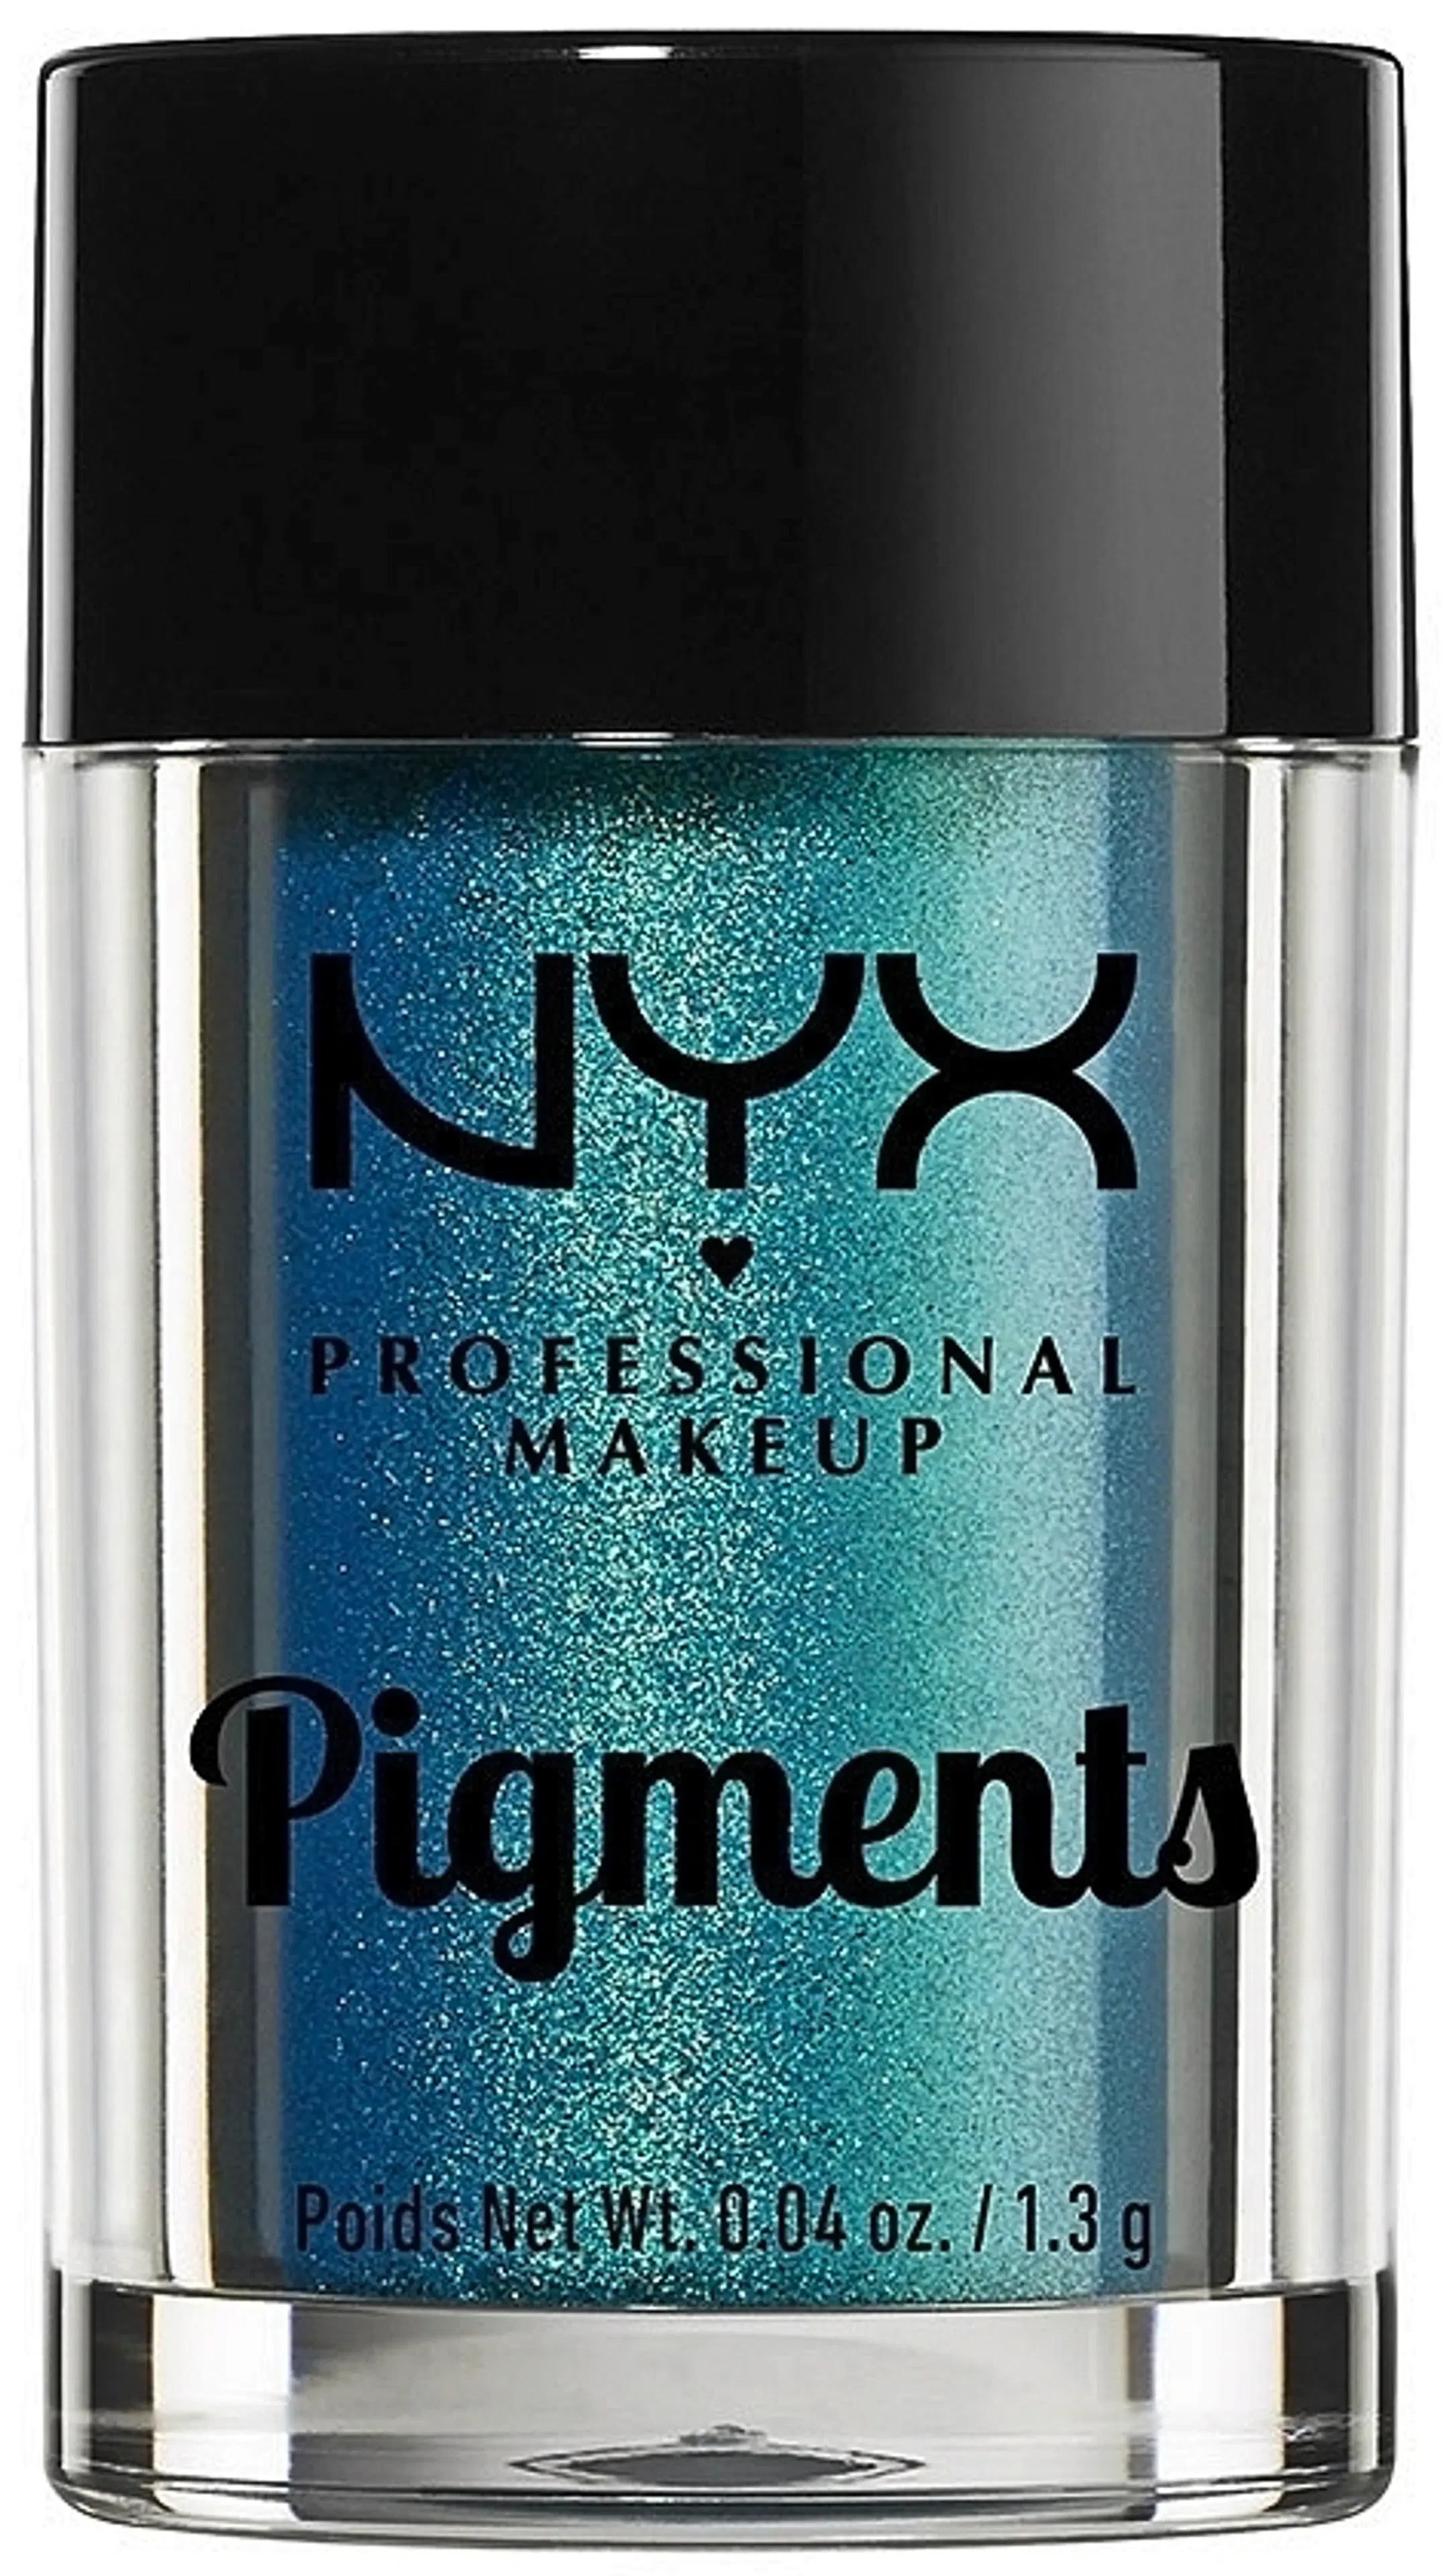 NYX Professional Makeup Pigment pigmenttiväri luomille 1,3 g